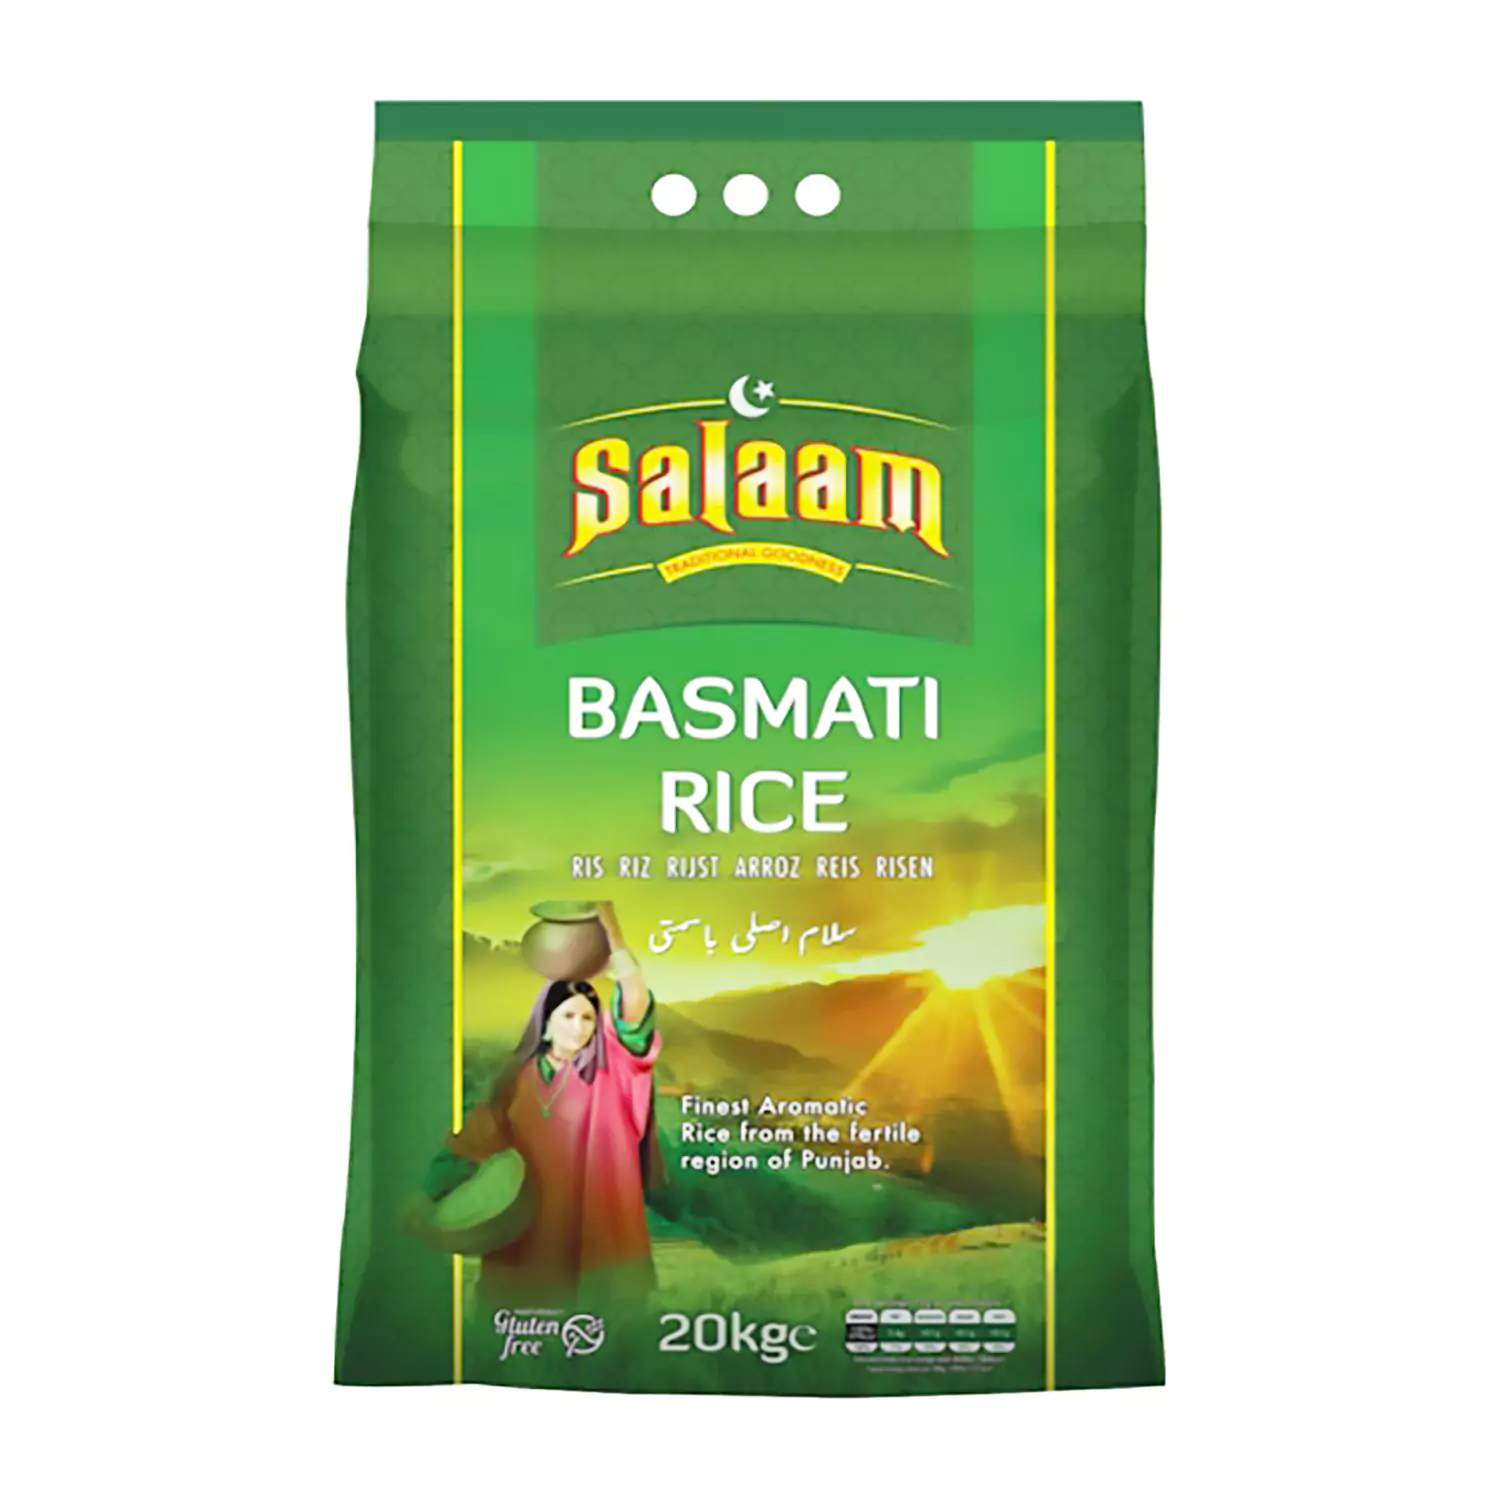 salaam-basmati-rice-20kg-6490245ce5fb2